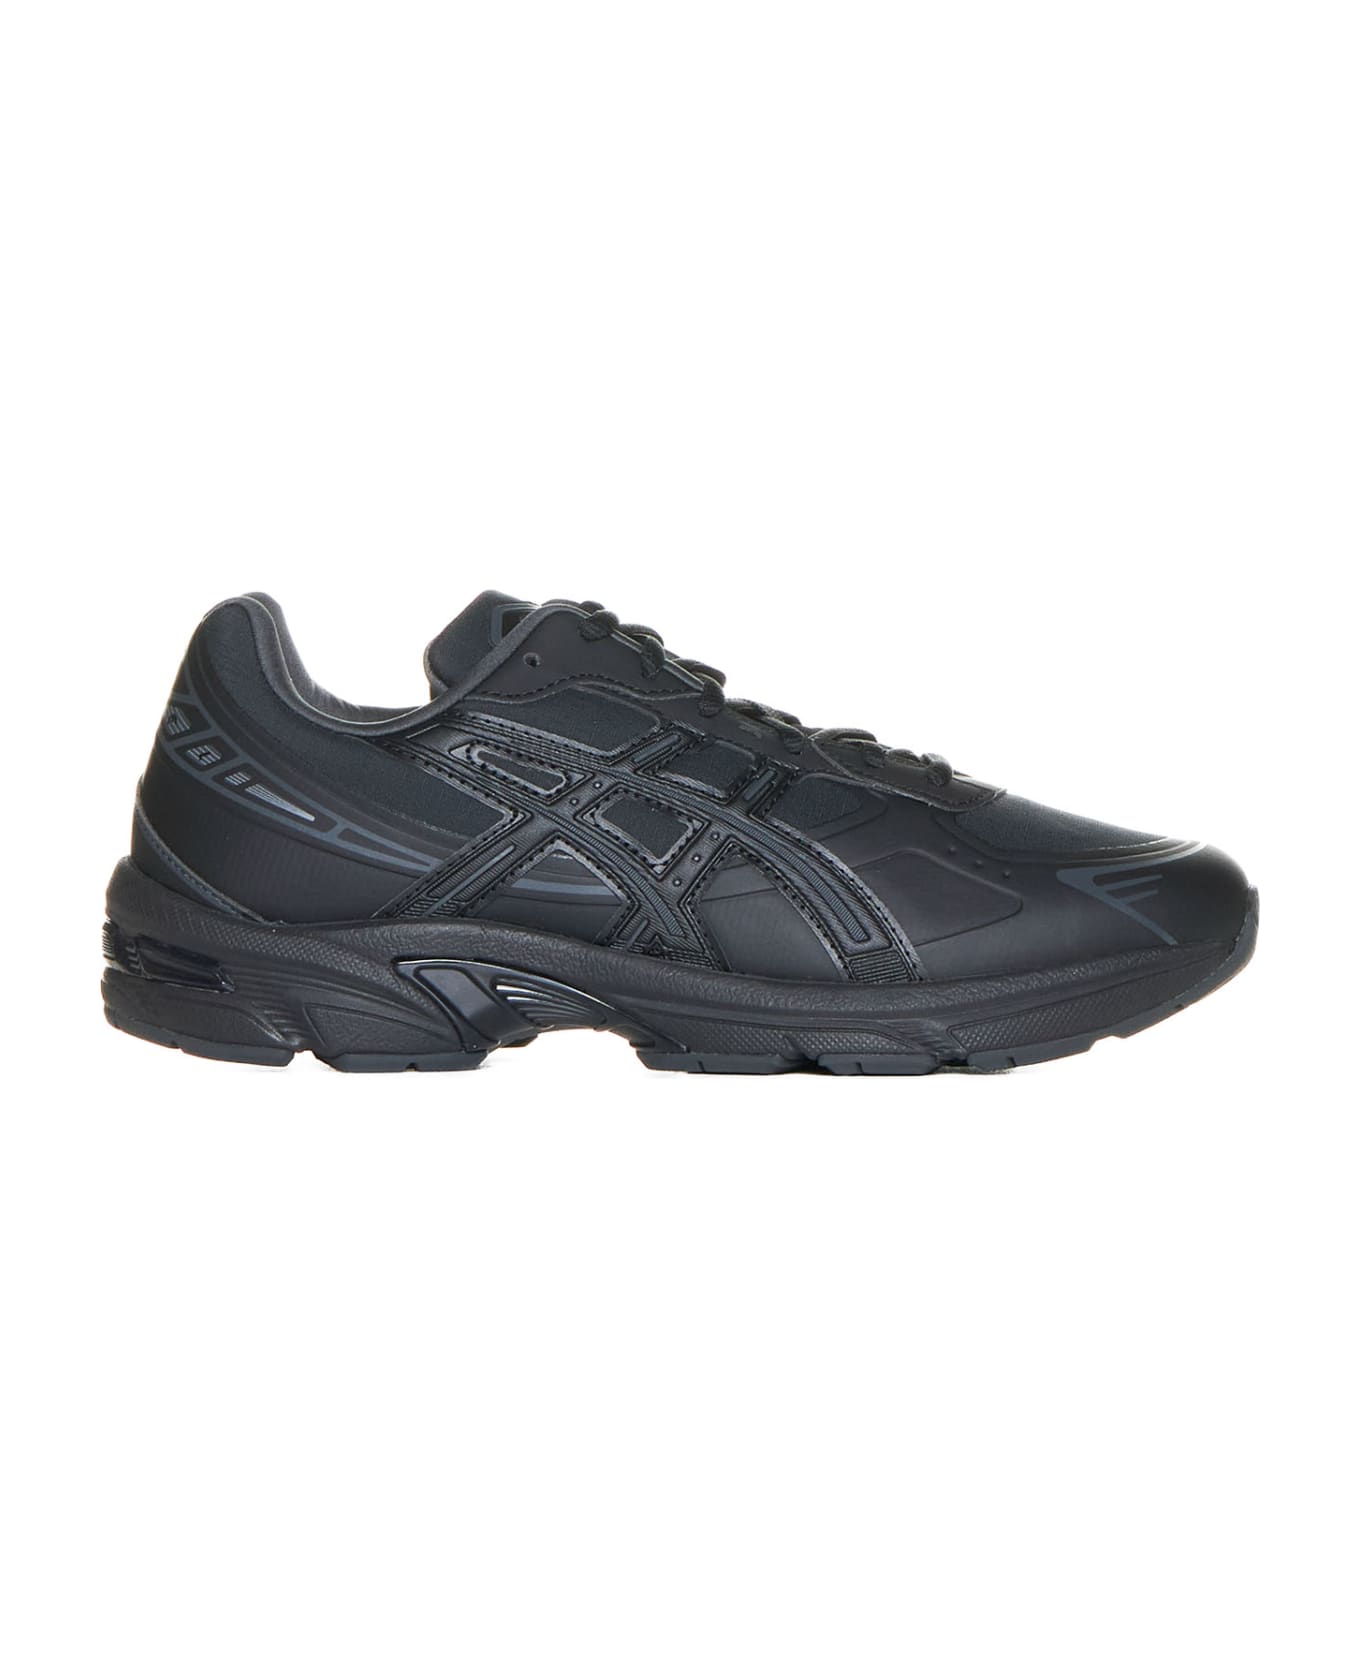 Asics Sneakers - Black/graphite grey